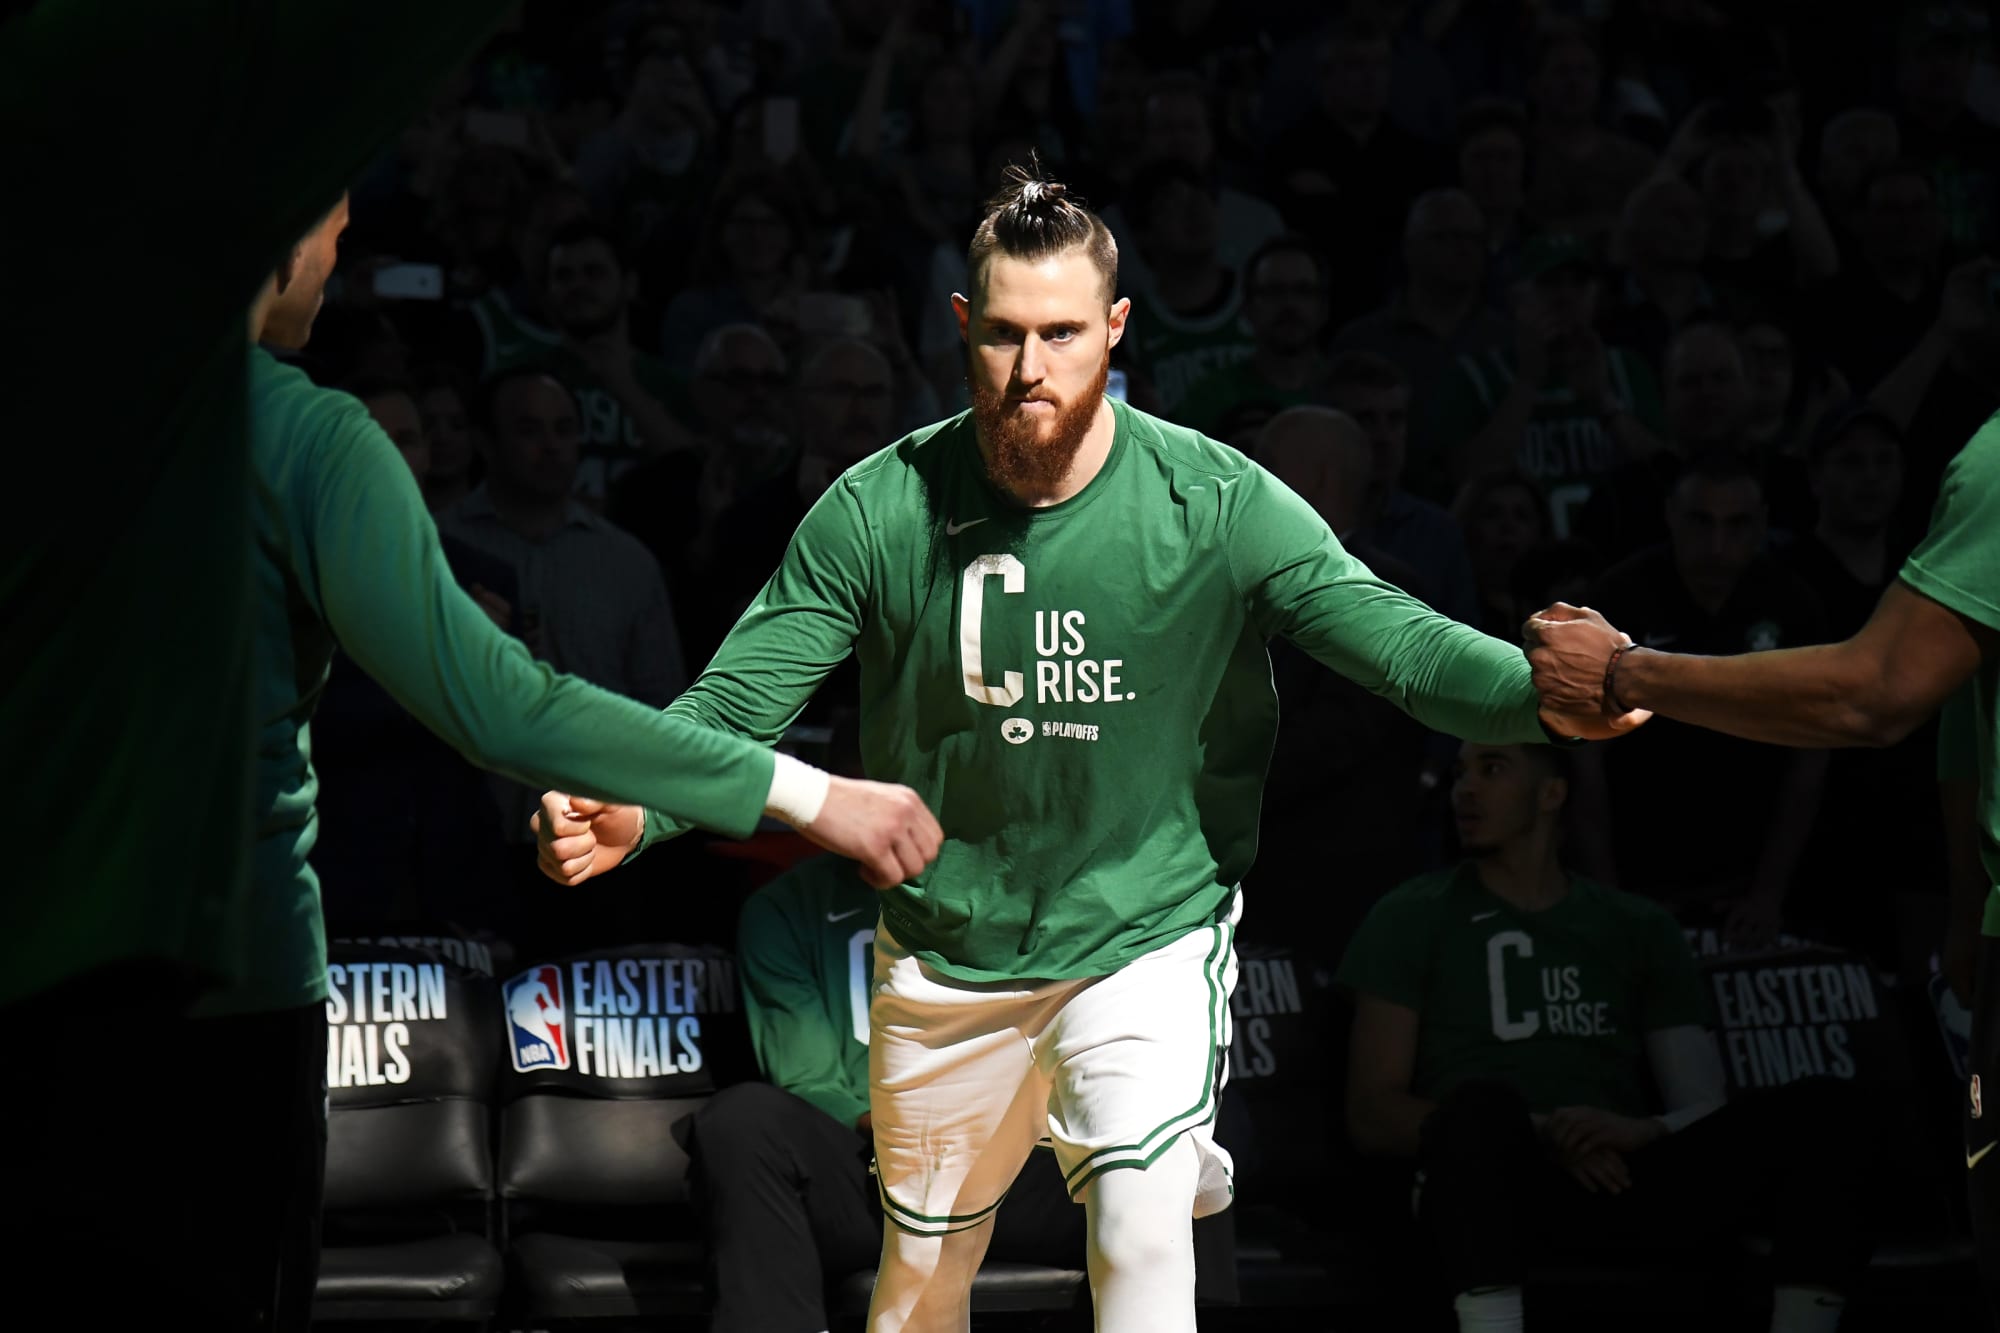 Aron Baynes - Boston Celtics - 2018 NBA Playoffs Game-Worn Jersey